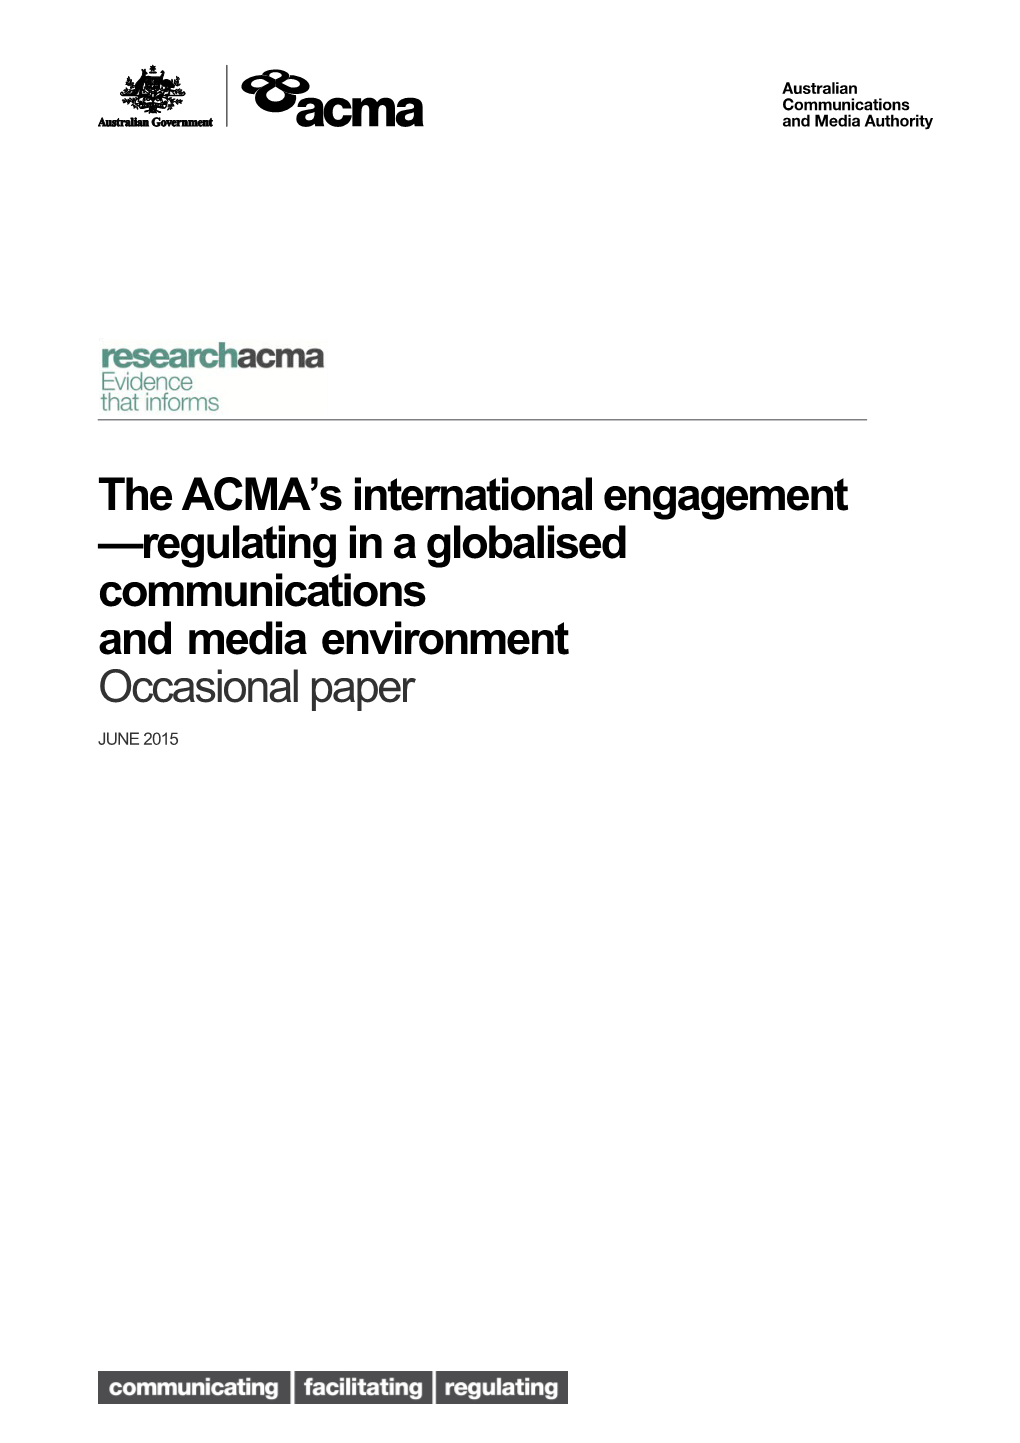 The ACMA S International Engagement Regulating in a Globalisedcommunications